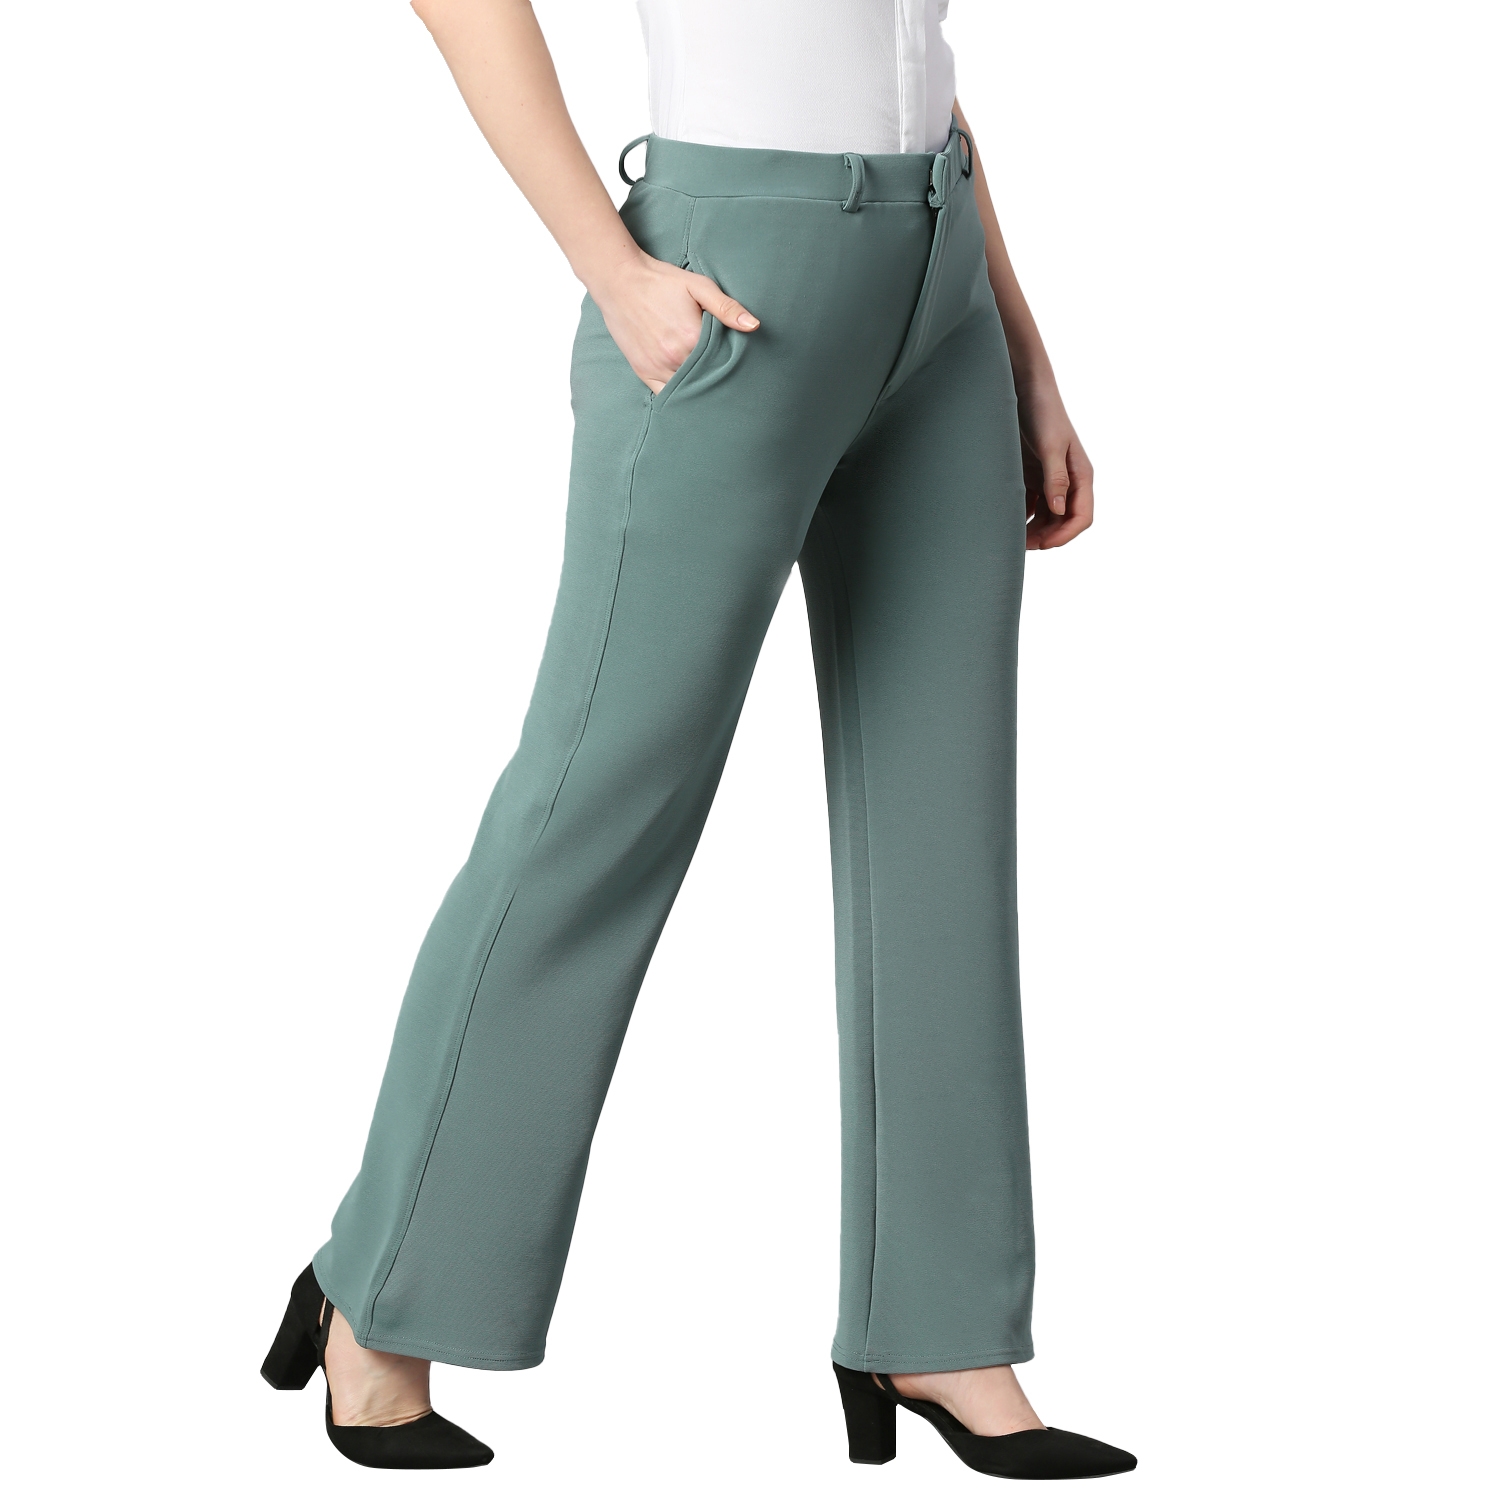 Smarty Pants Women's Cotton Lycra Regular Fit Bell Bottom Black